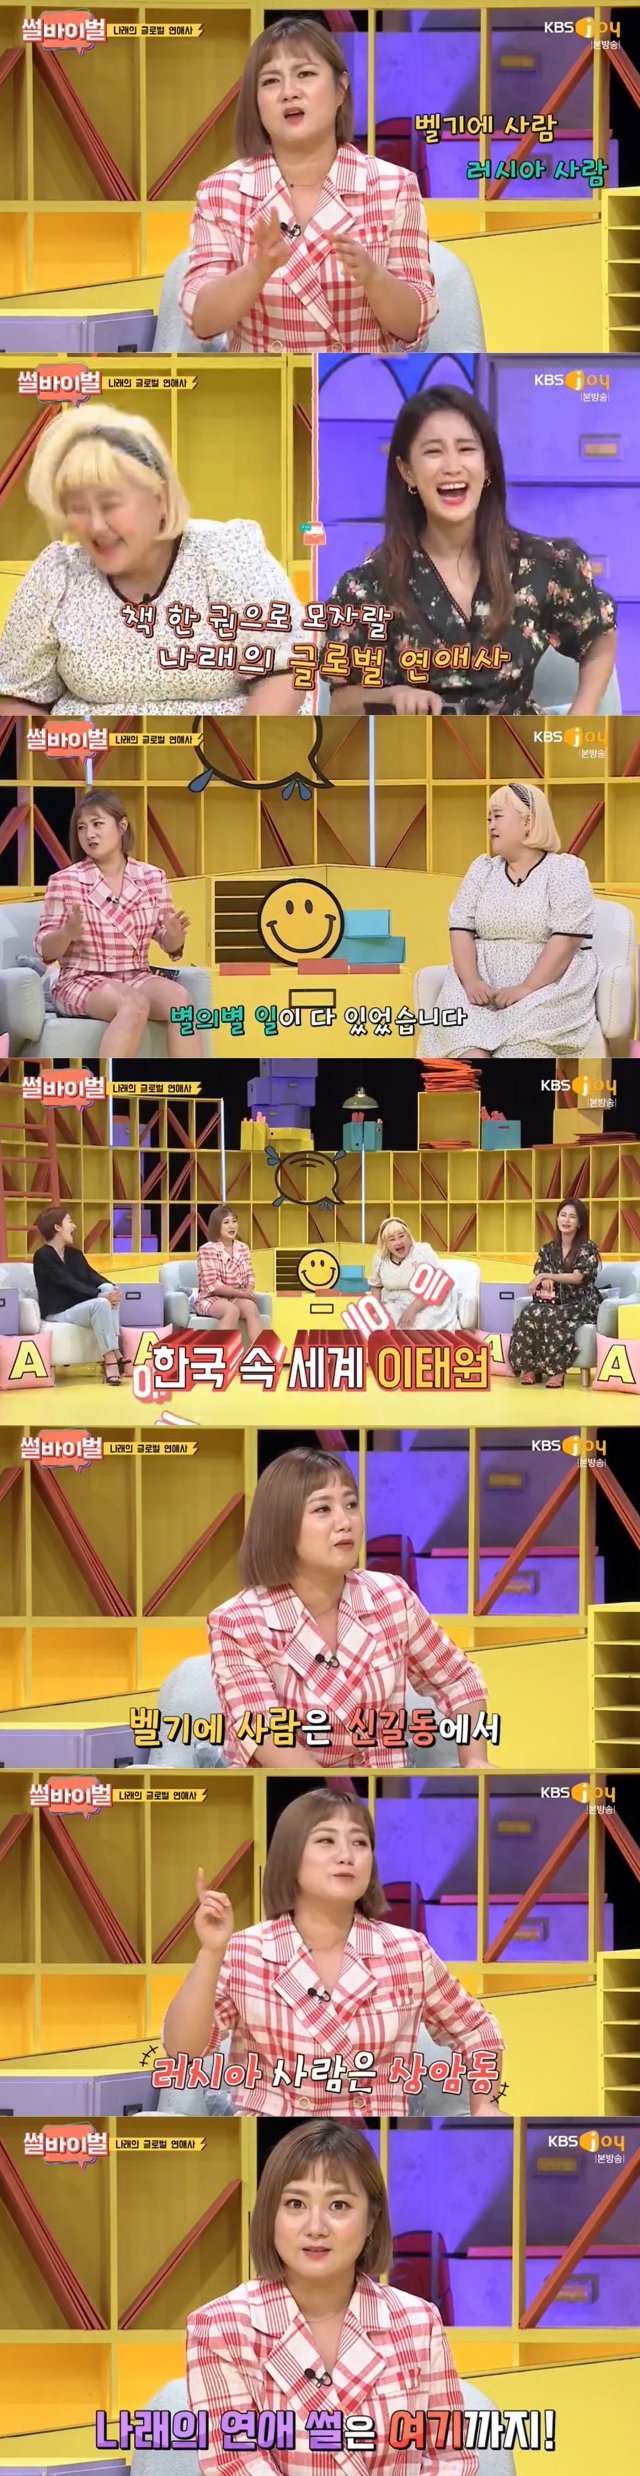 KBS Joy 예능 프로그램 ‘썰바이벌’ 방송 화면 갈무리 © 뉴스1